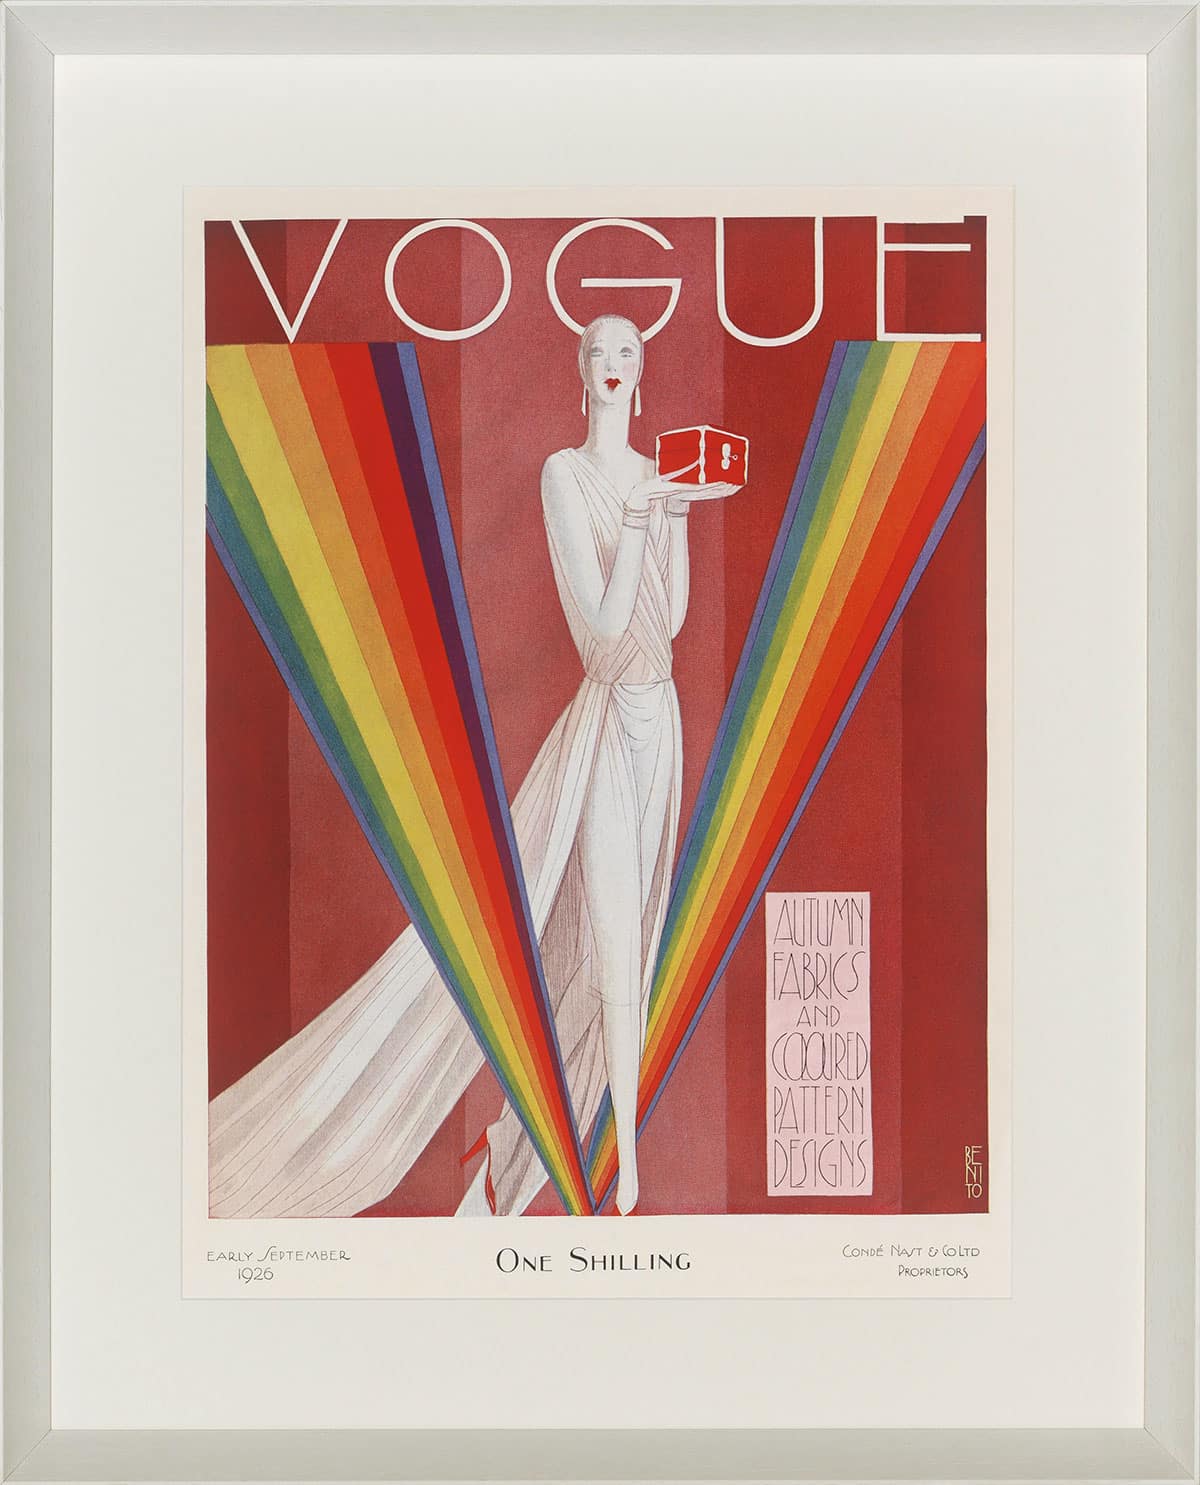 ablo-blommaert-vogue-collection-vogue-september-1926-eduardo-benito-b610-001shop